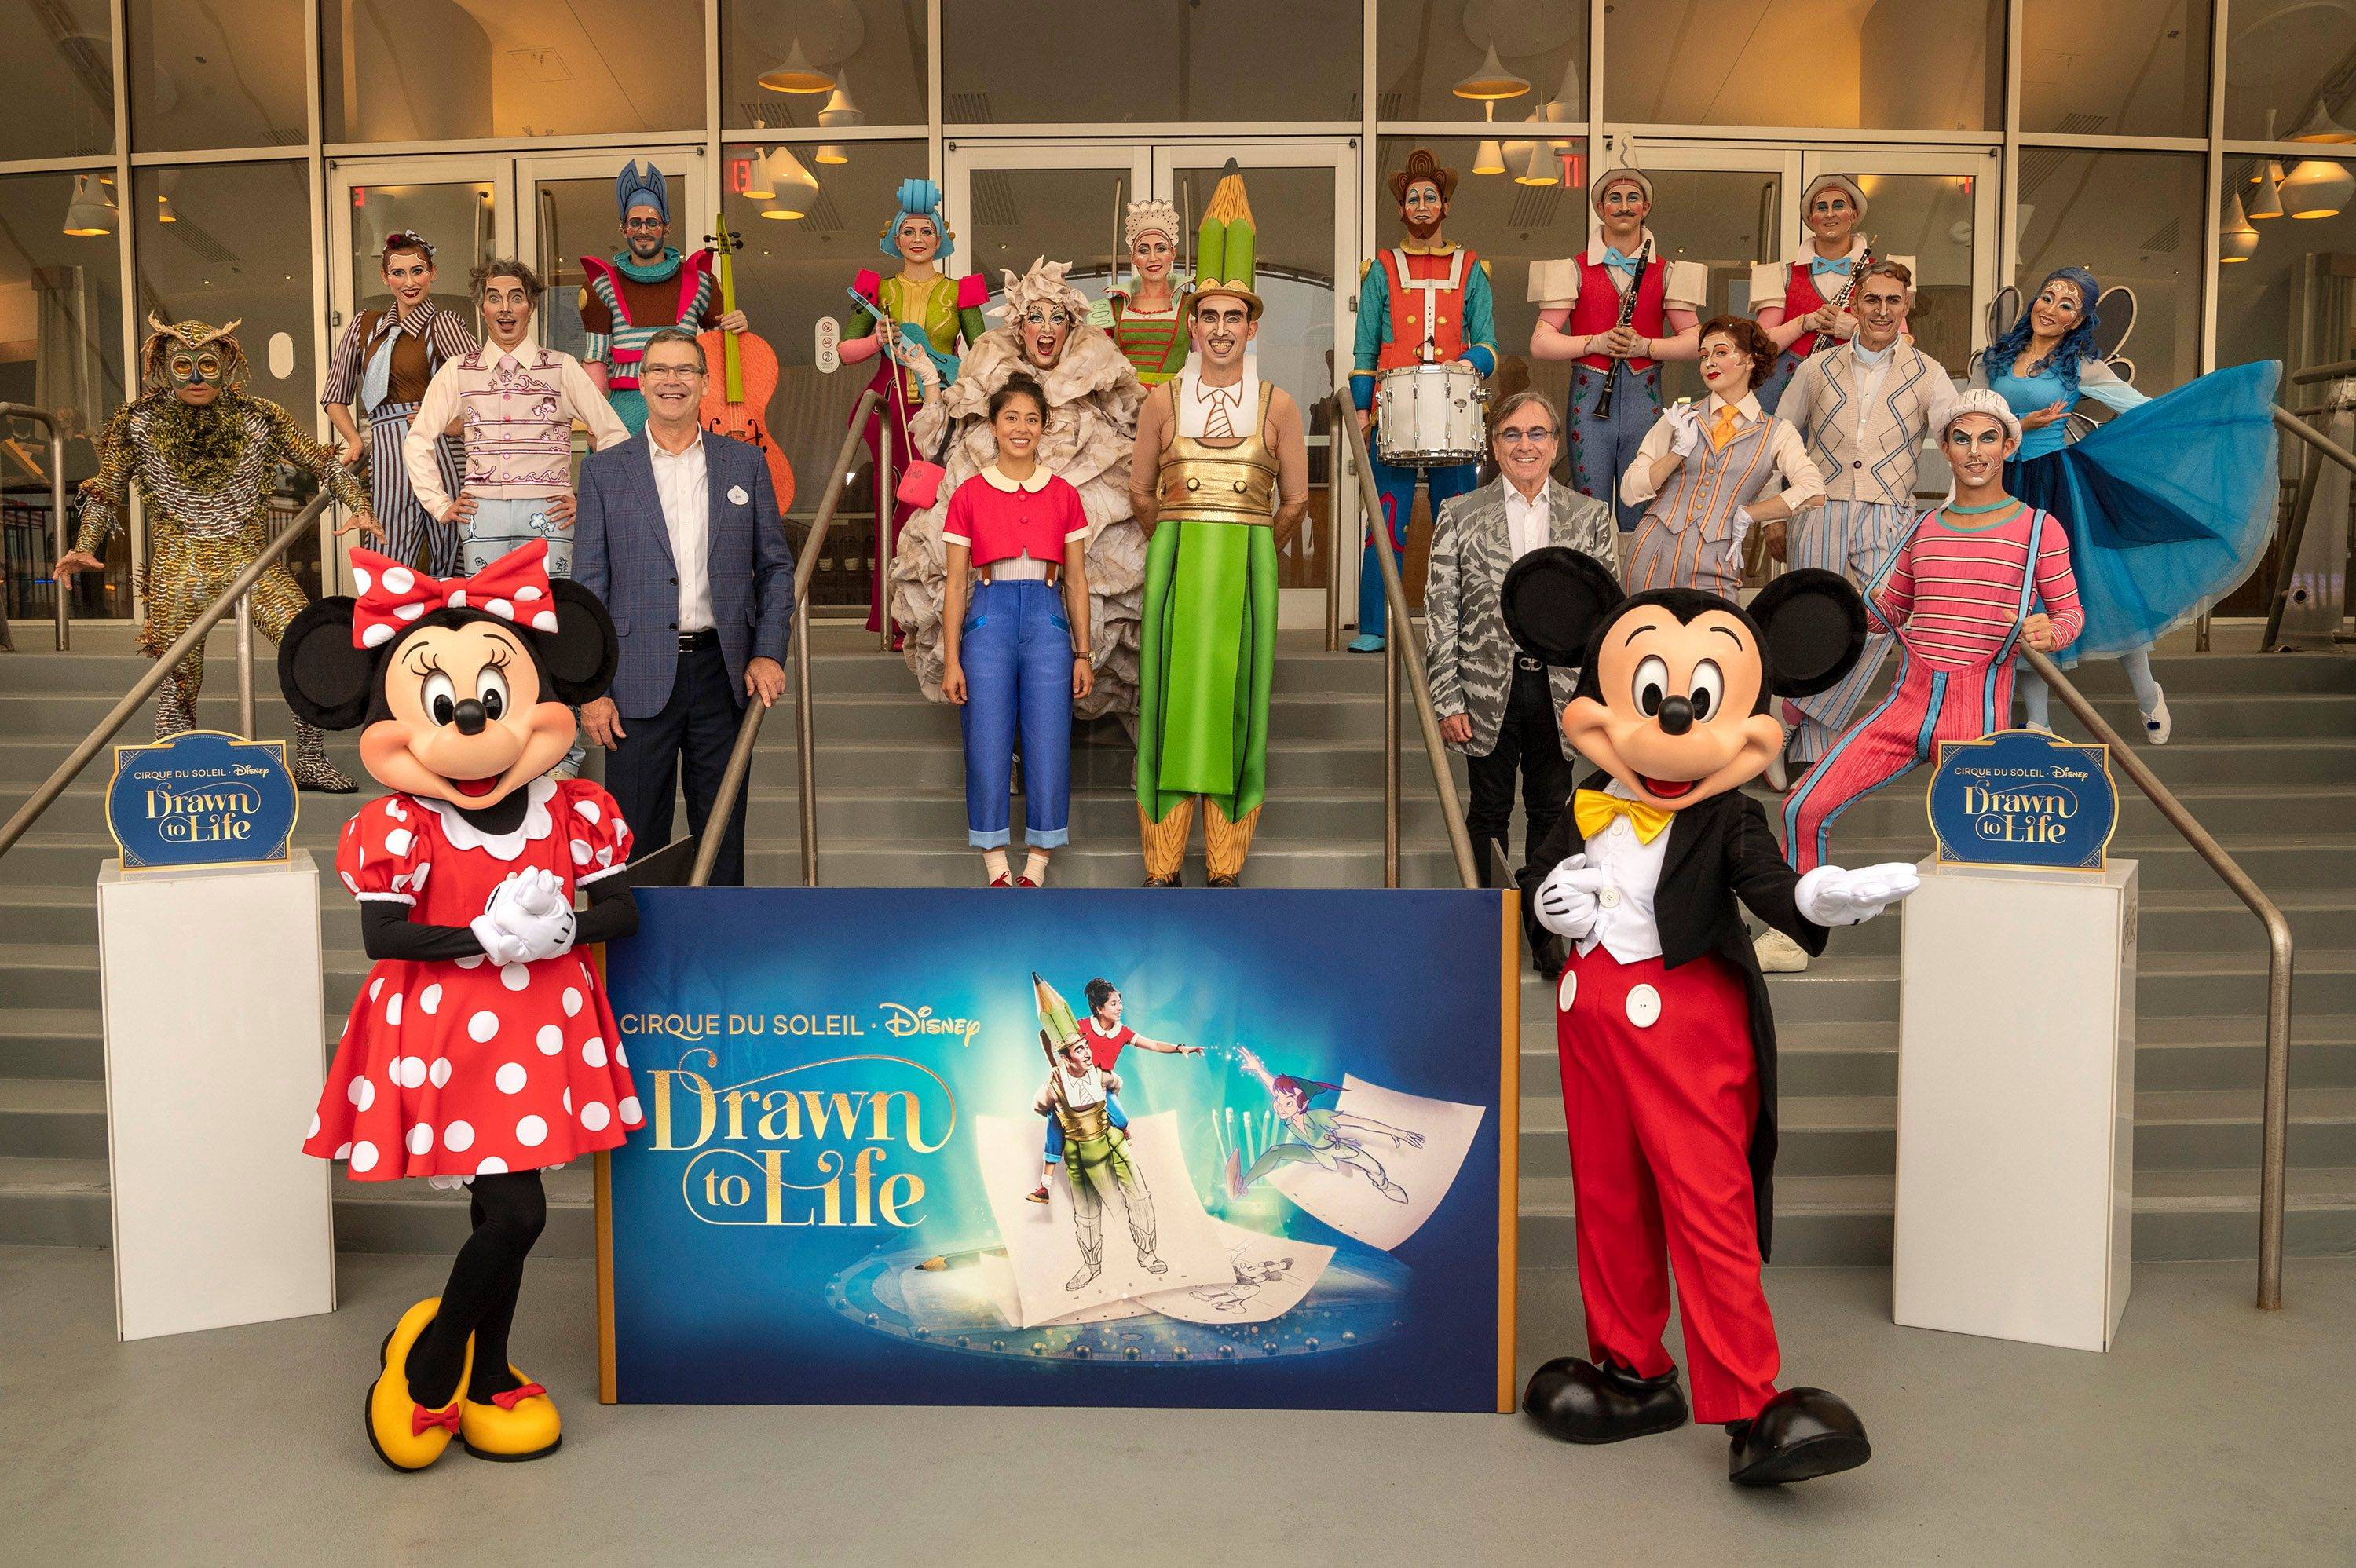 Cirque du Soleil Drawn to Life debuts at Walt Disney World